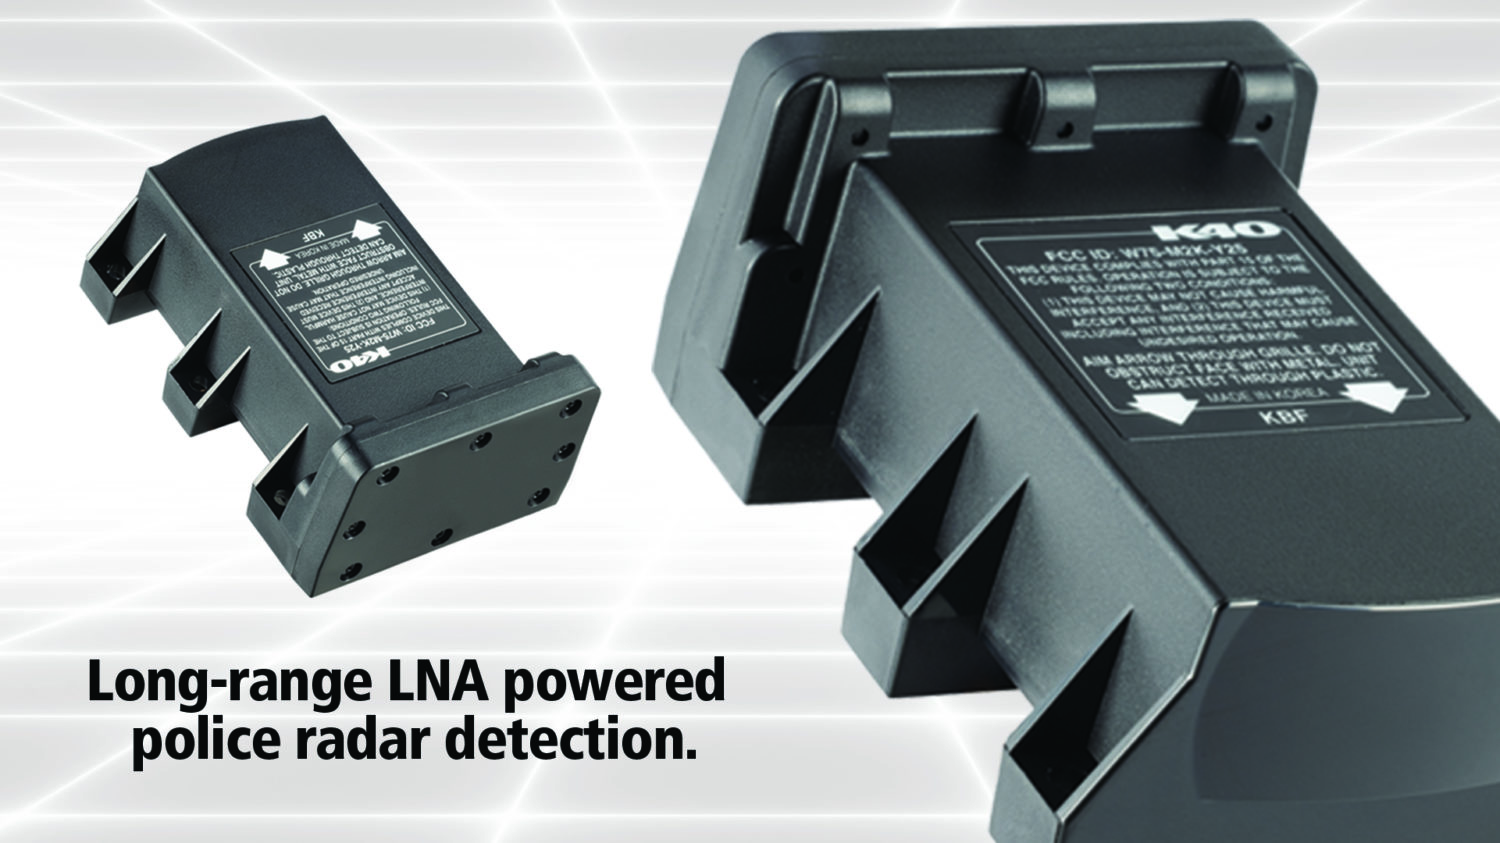 All-New LNA Radar Receivers in the new K40 Platinum Series